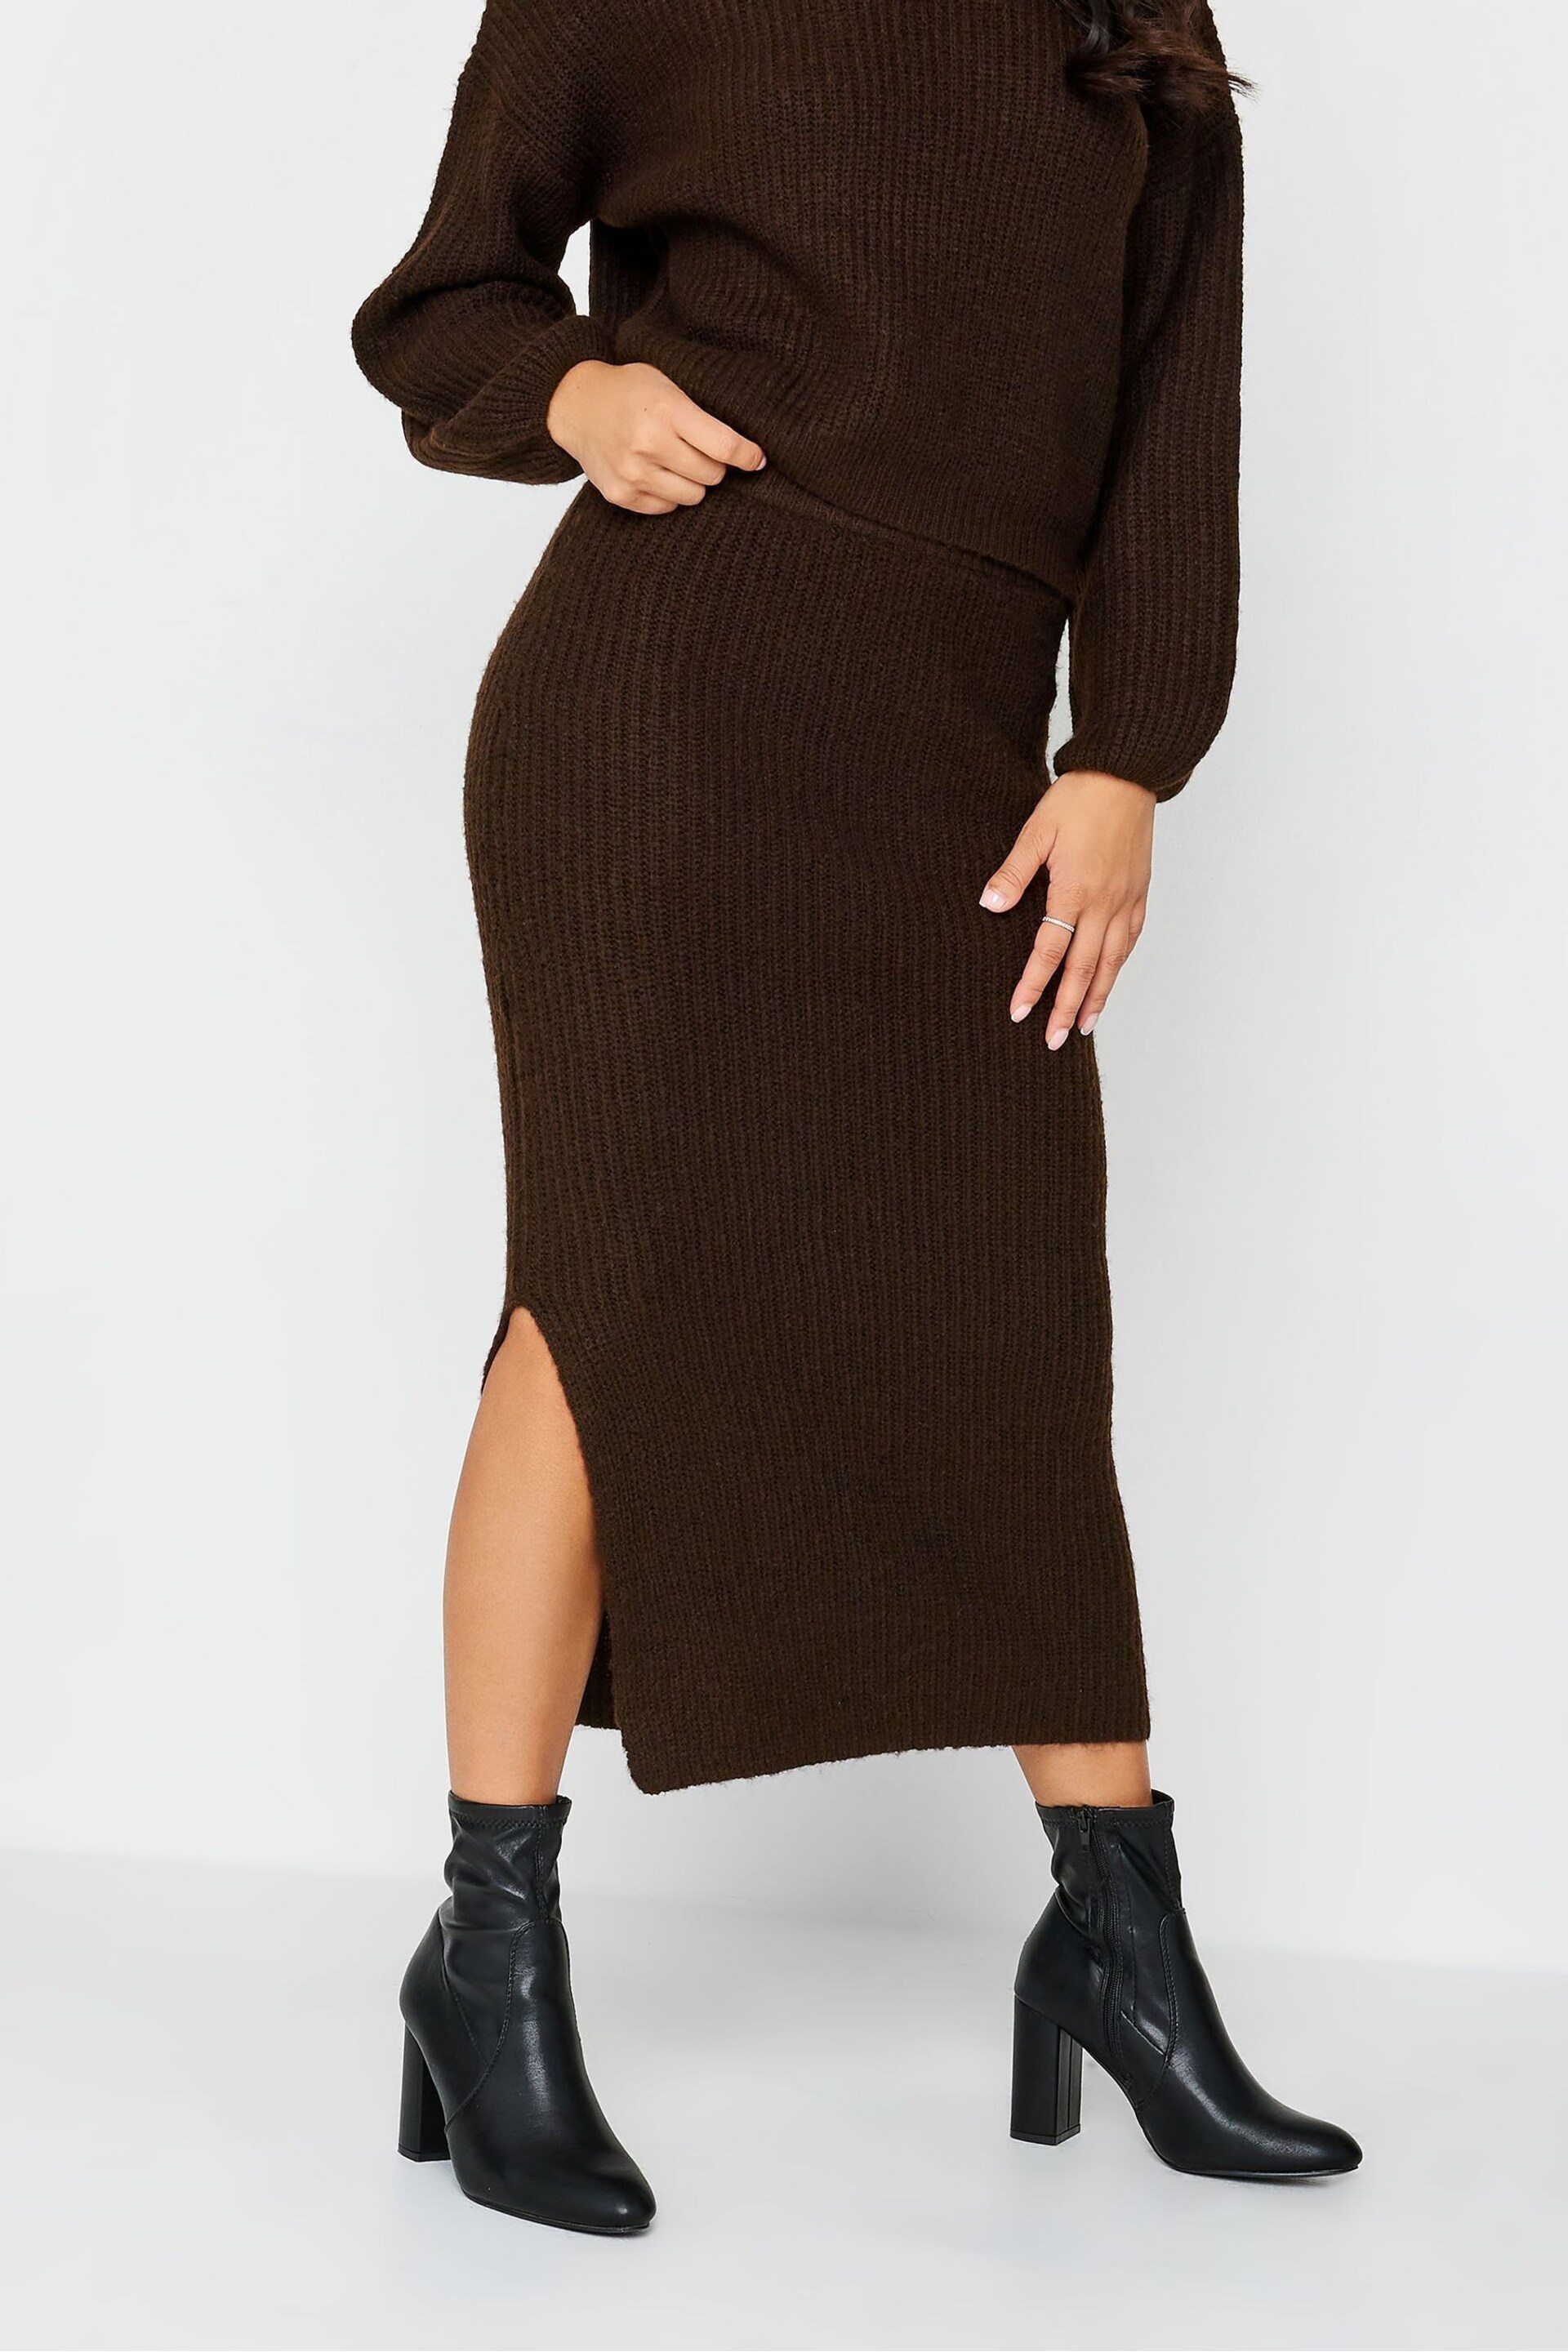 PixieGirl Petite Brown Midi Knitted Skirt - Image 2 of 5